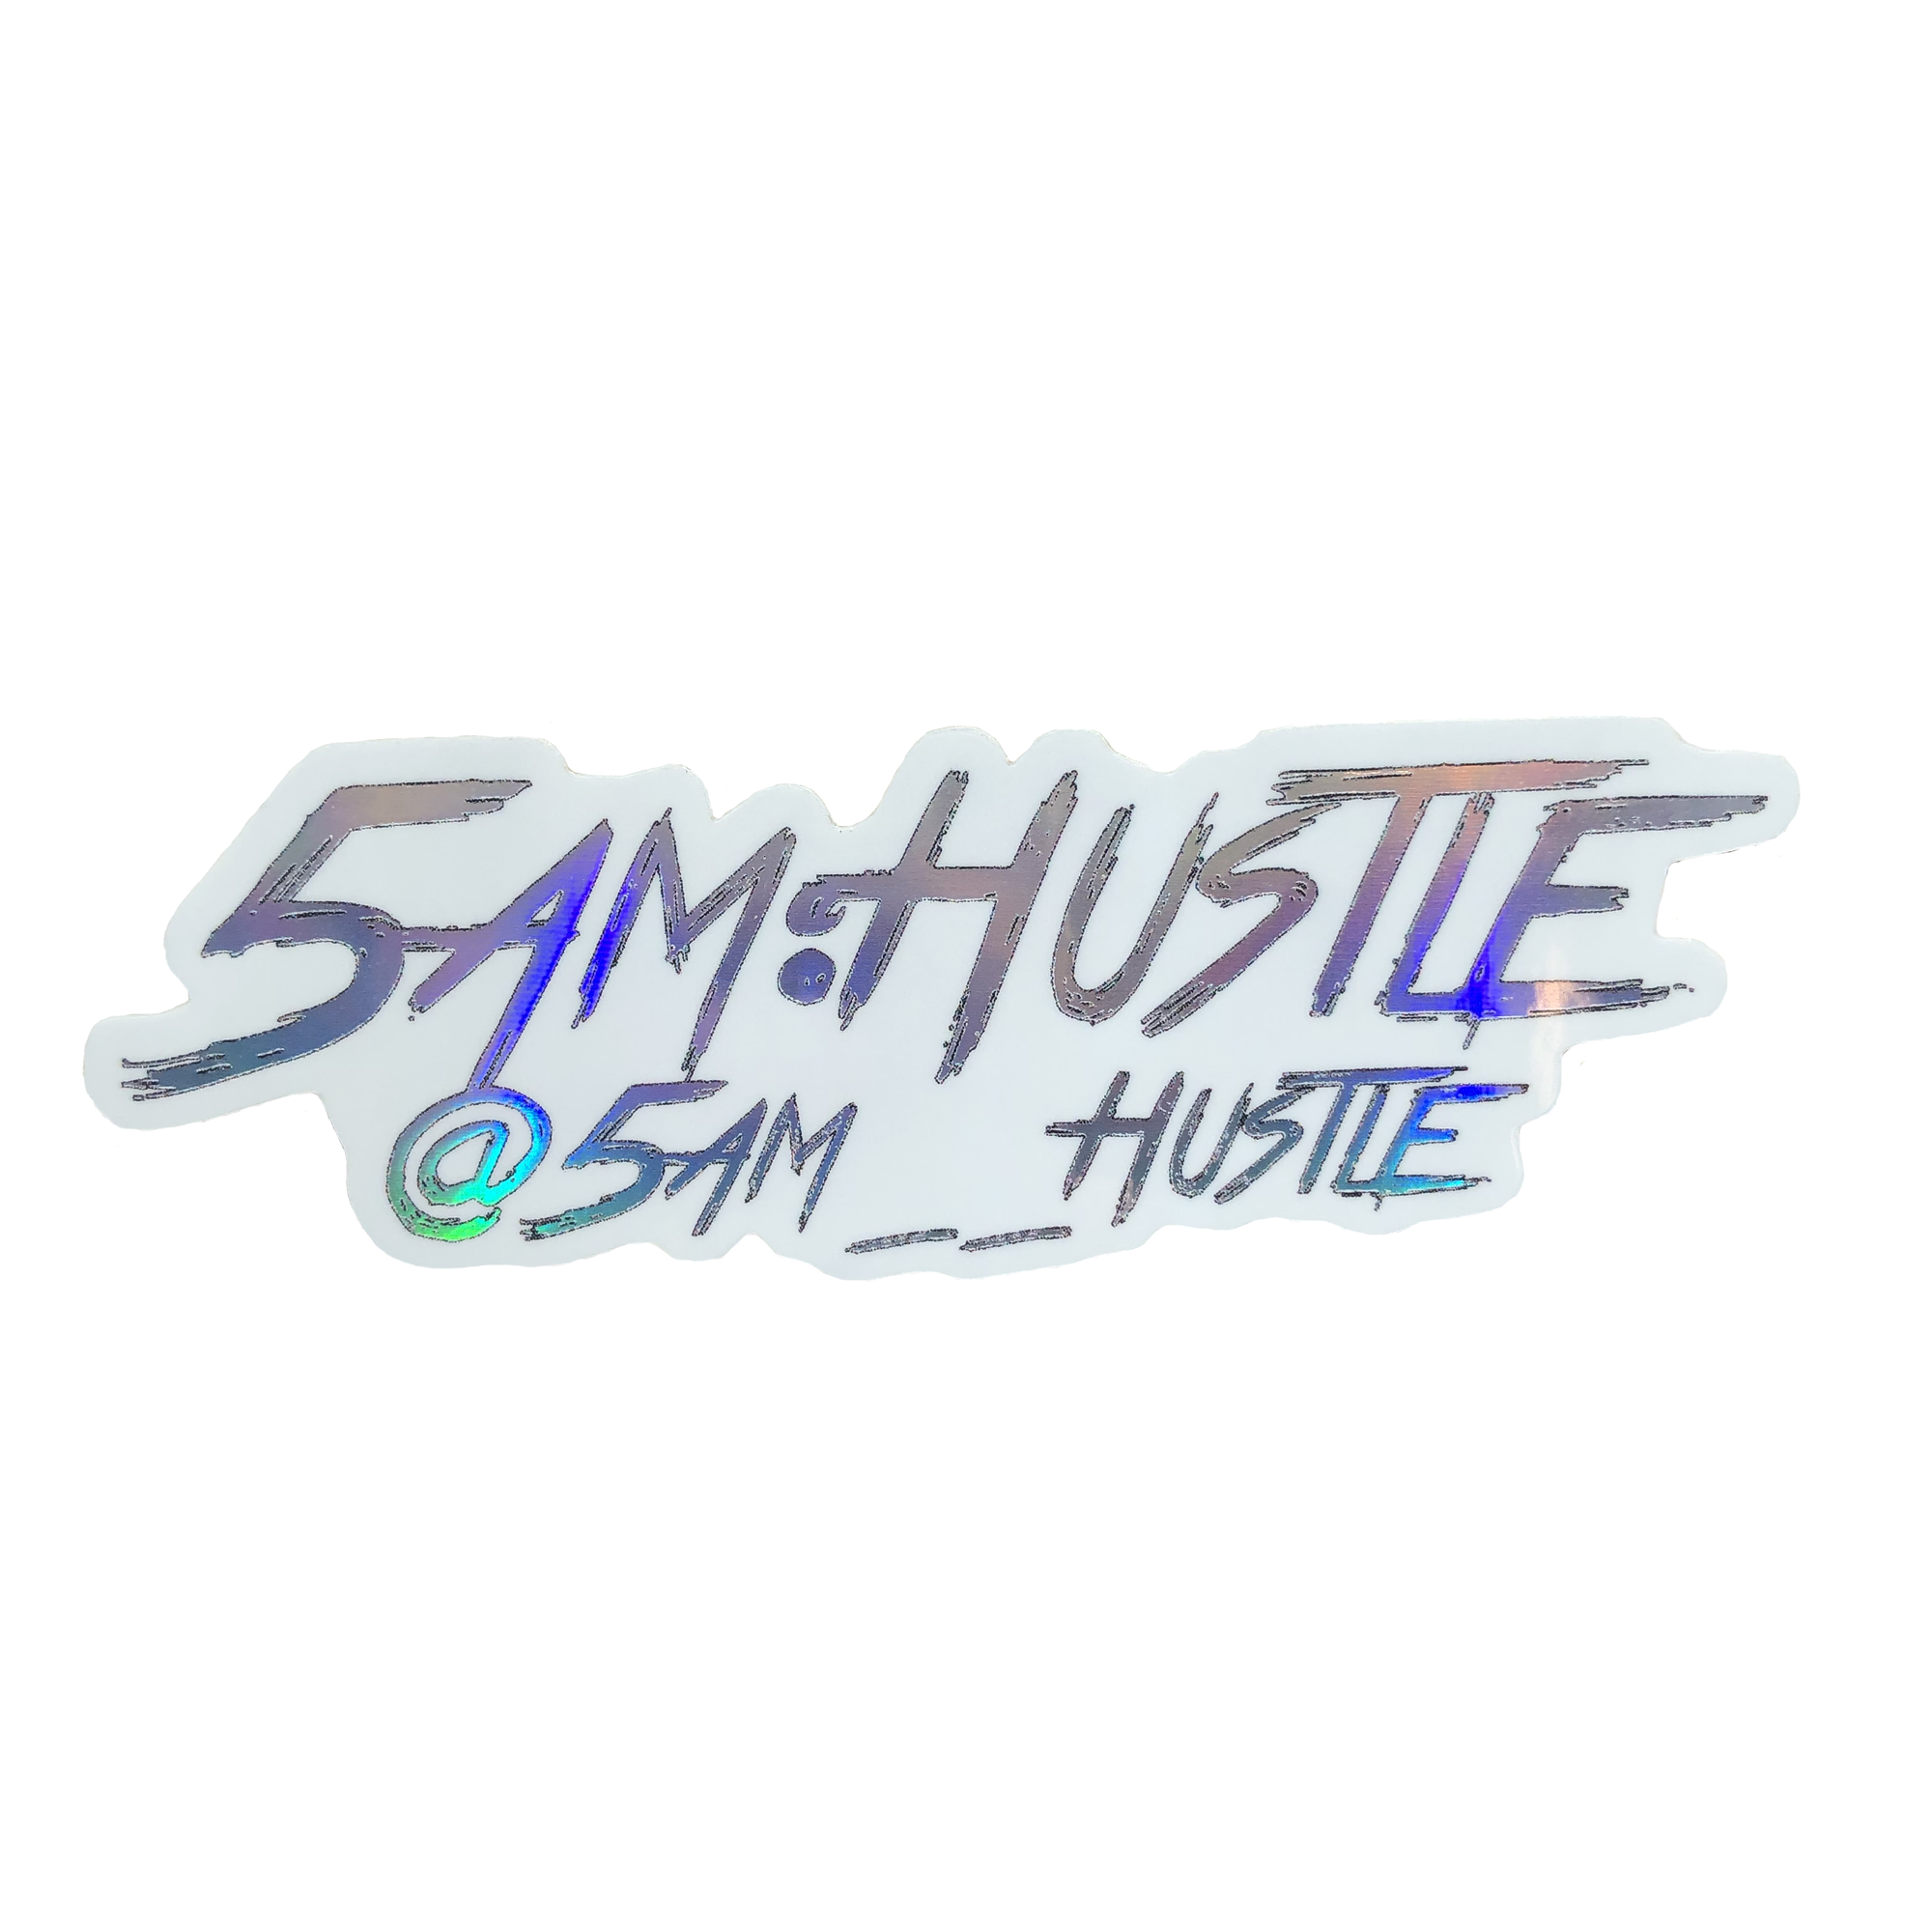 5am:Hustle Holographic Sticker